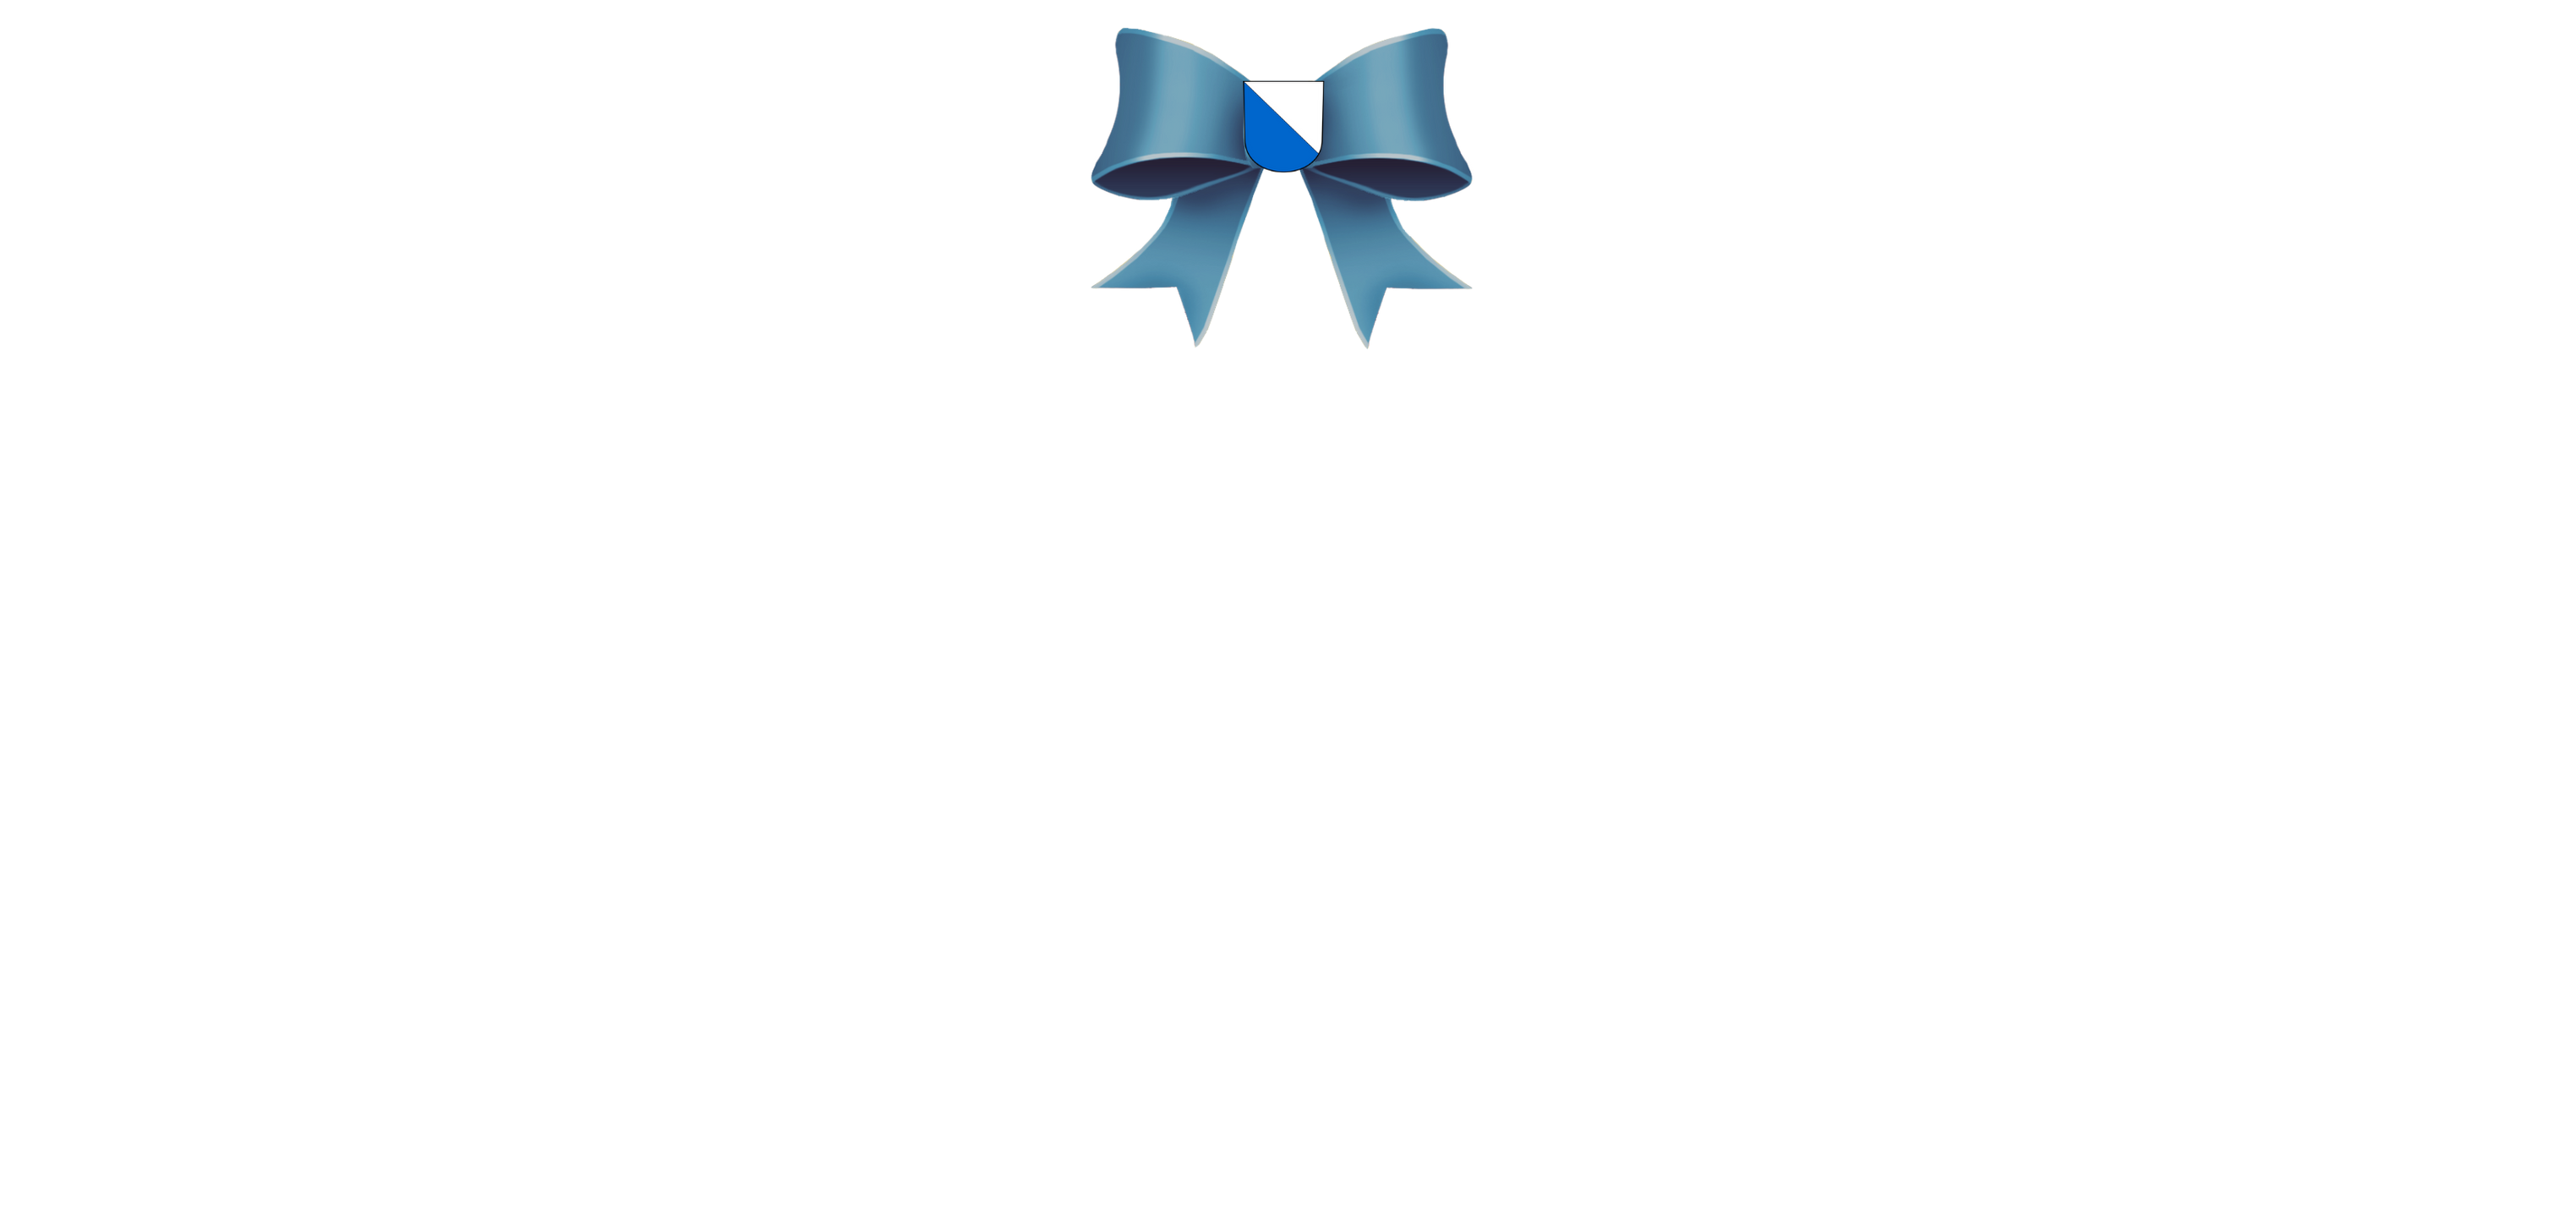 Züri-Chistli